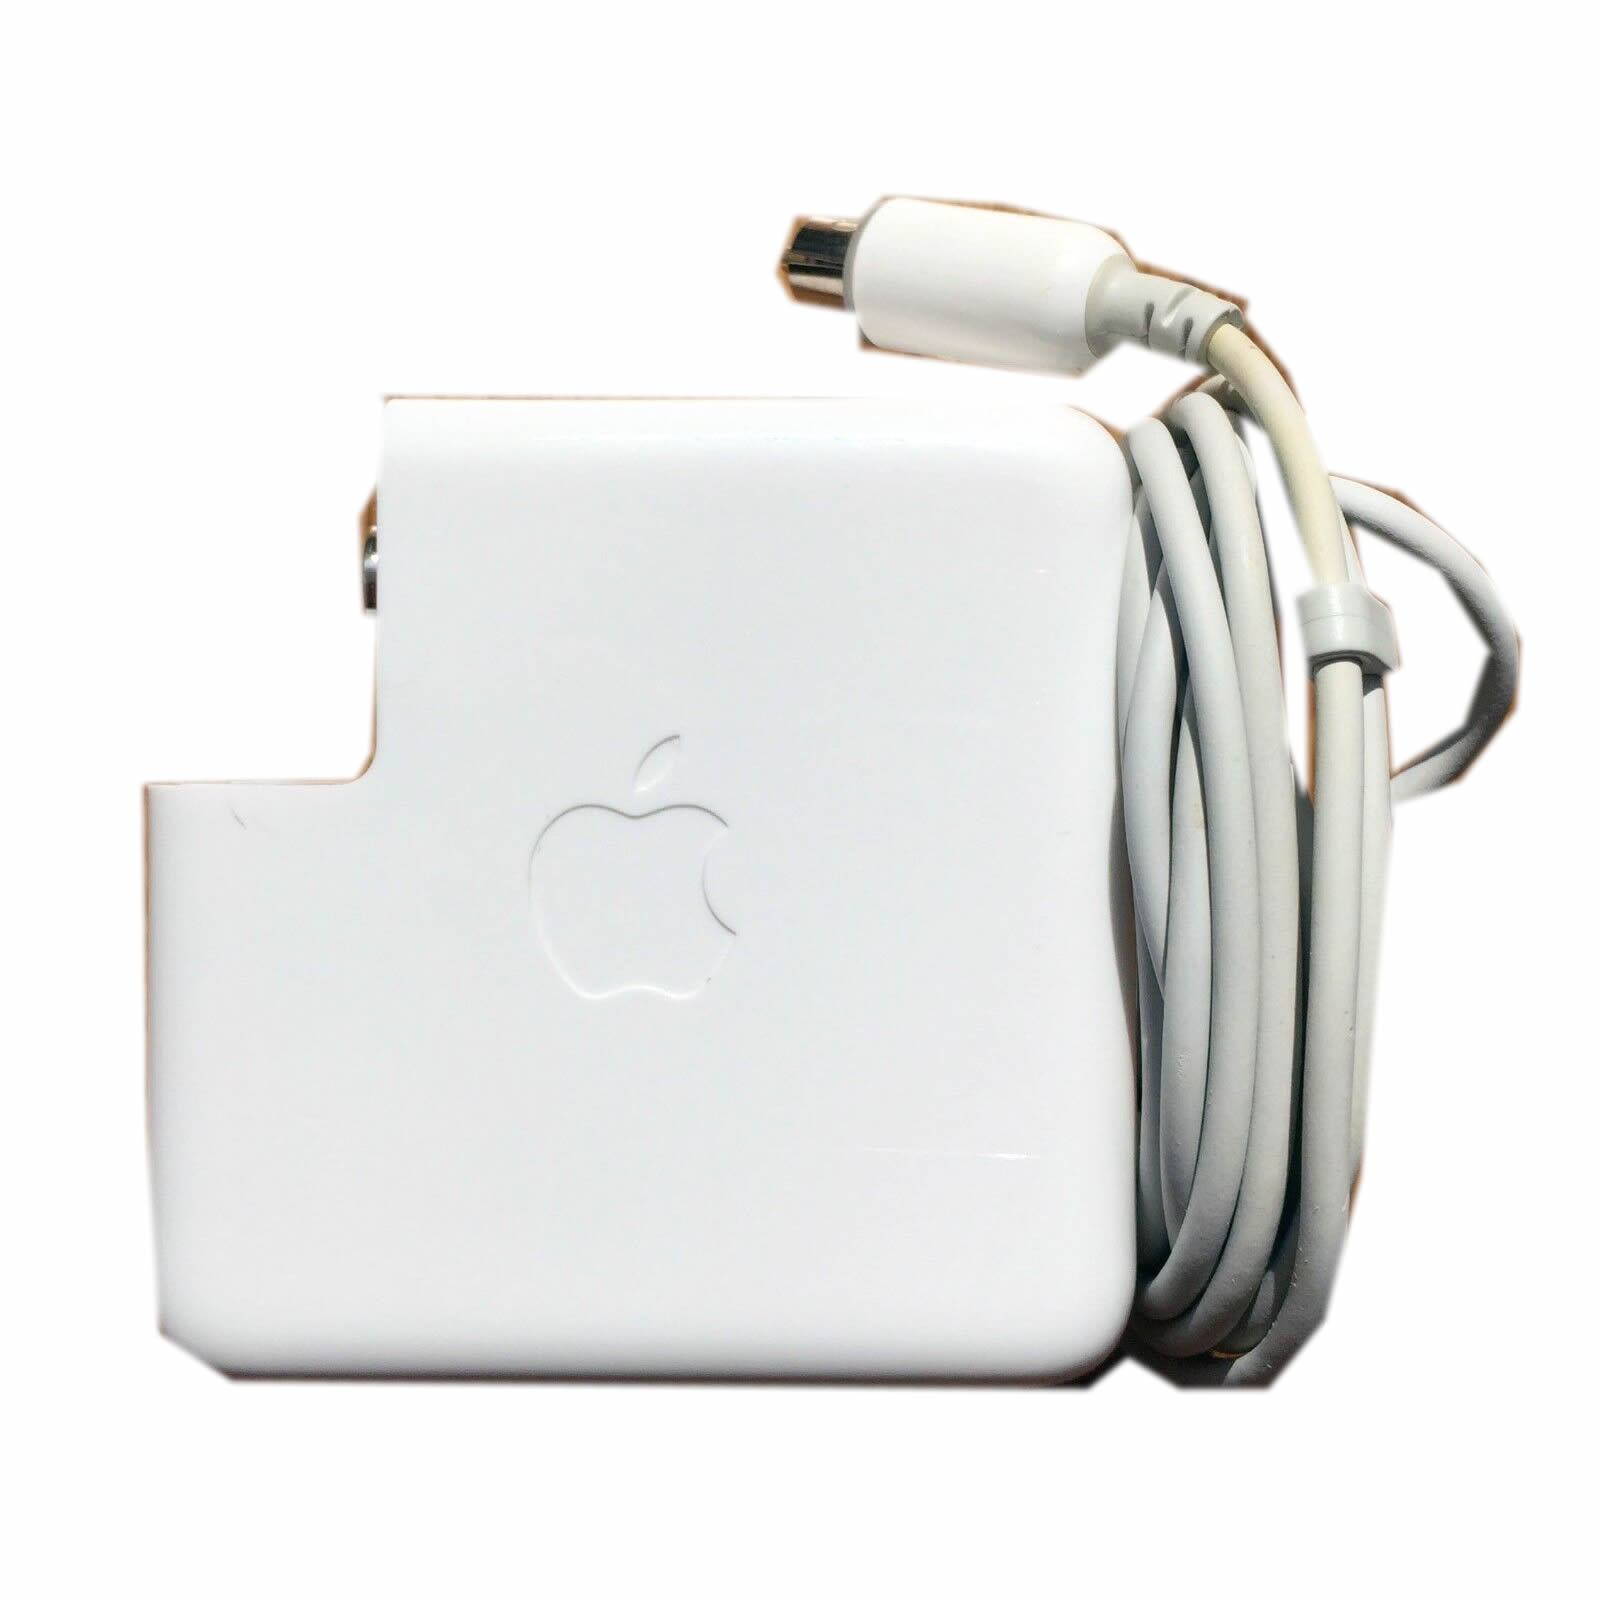 apple powerbook g4 m9689hk/a laptop ac adapter